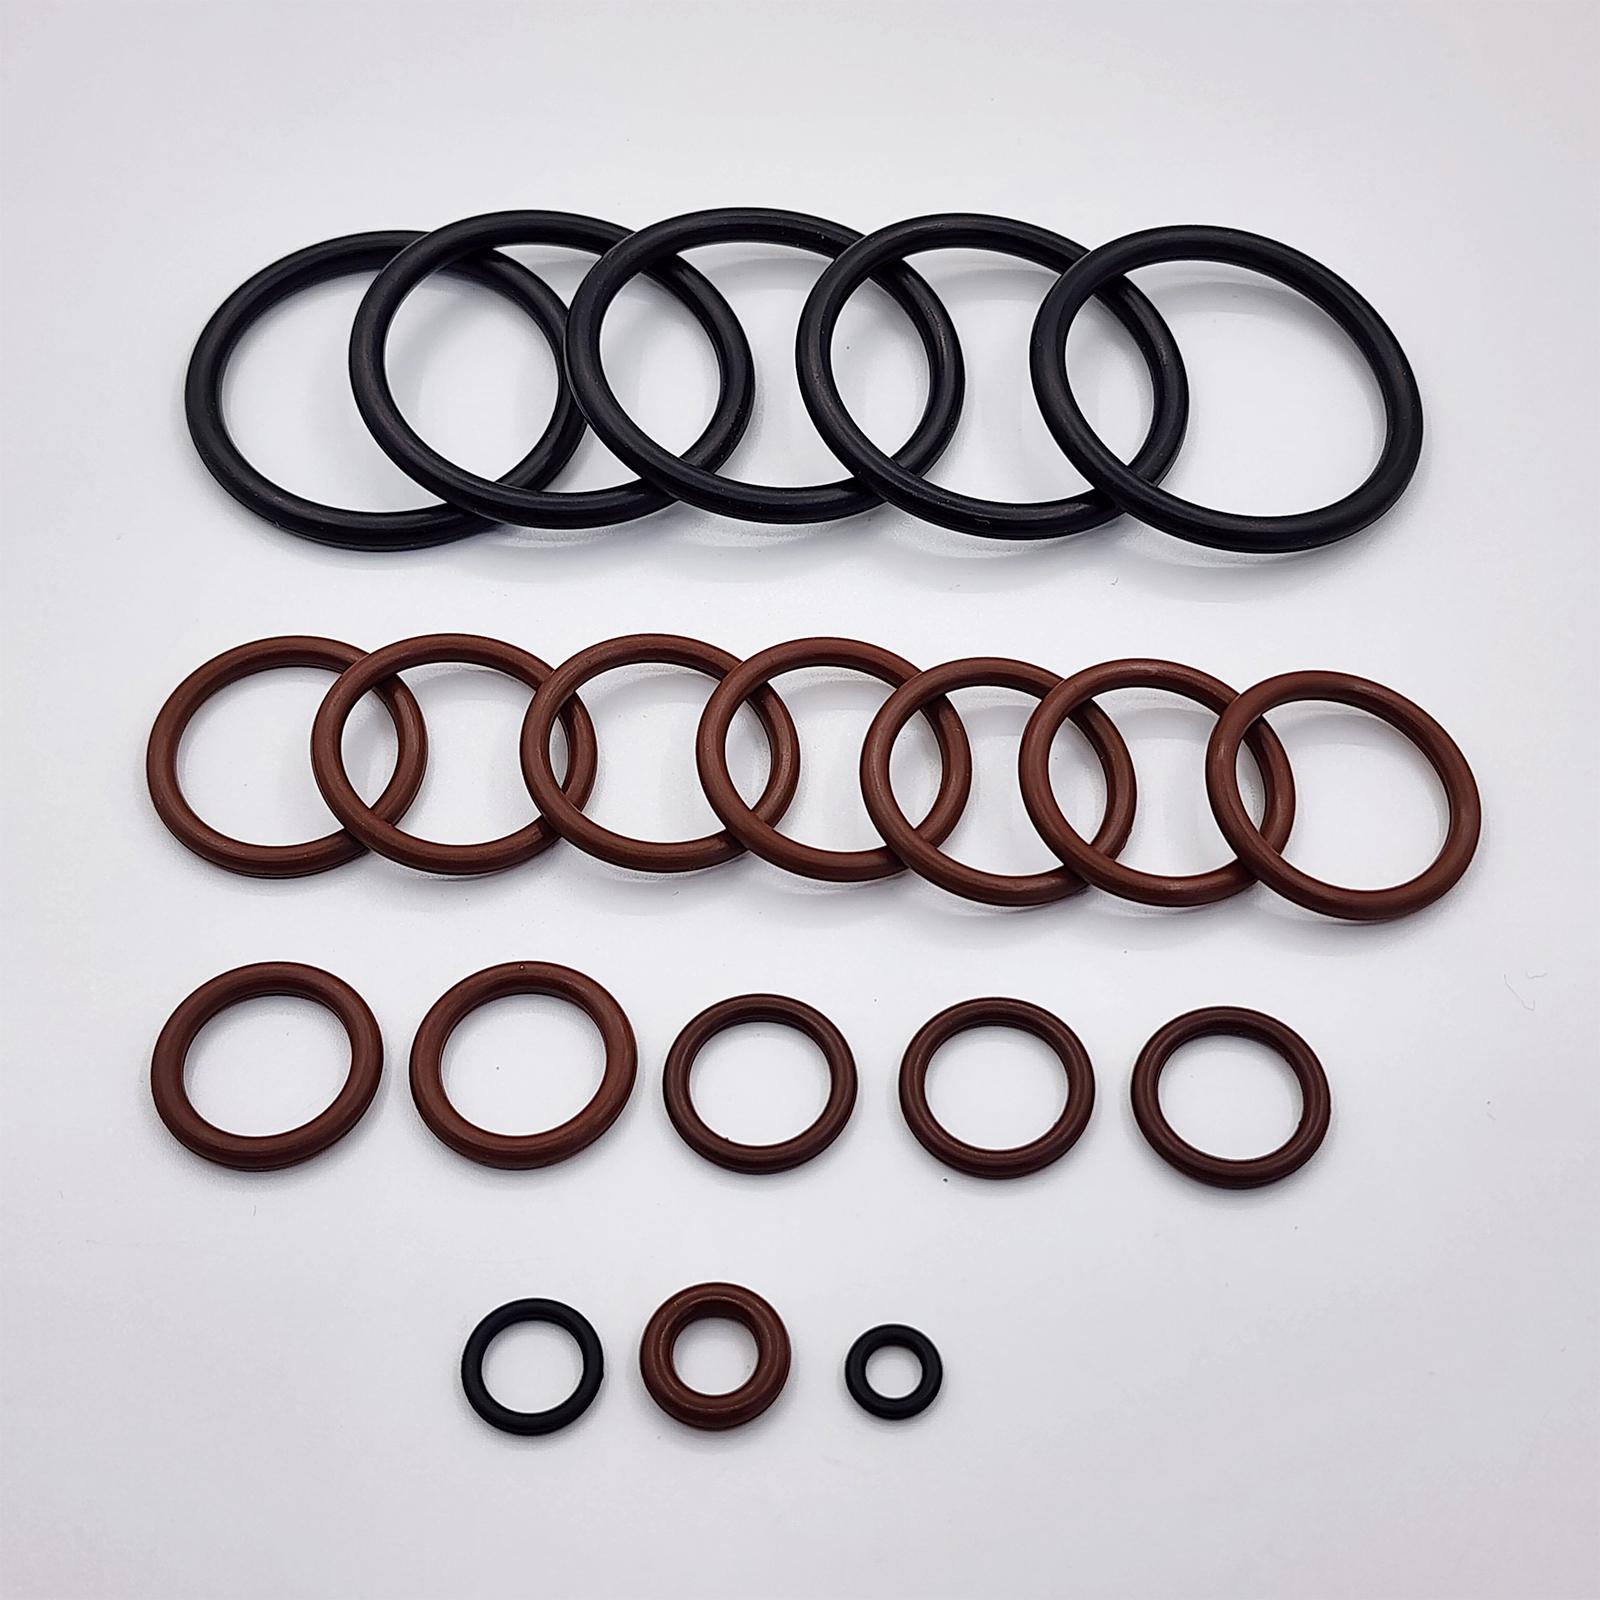 Cooling System O-Ring Kit for BMW E46 M52 M54 320i 323i 325i 328i 330i